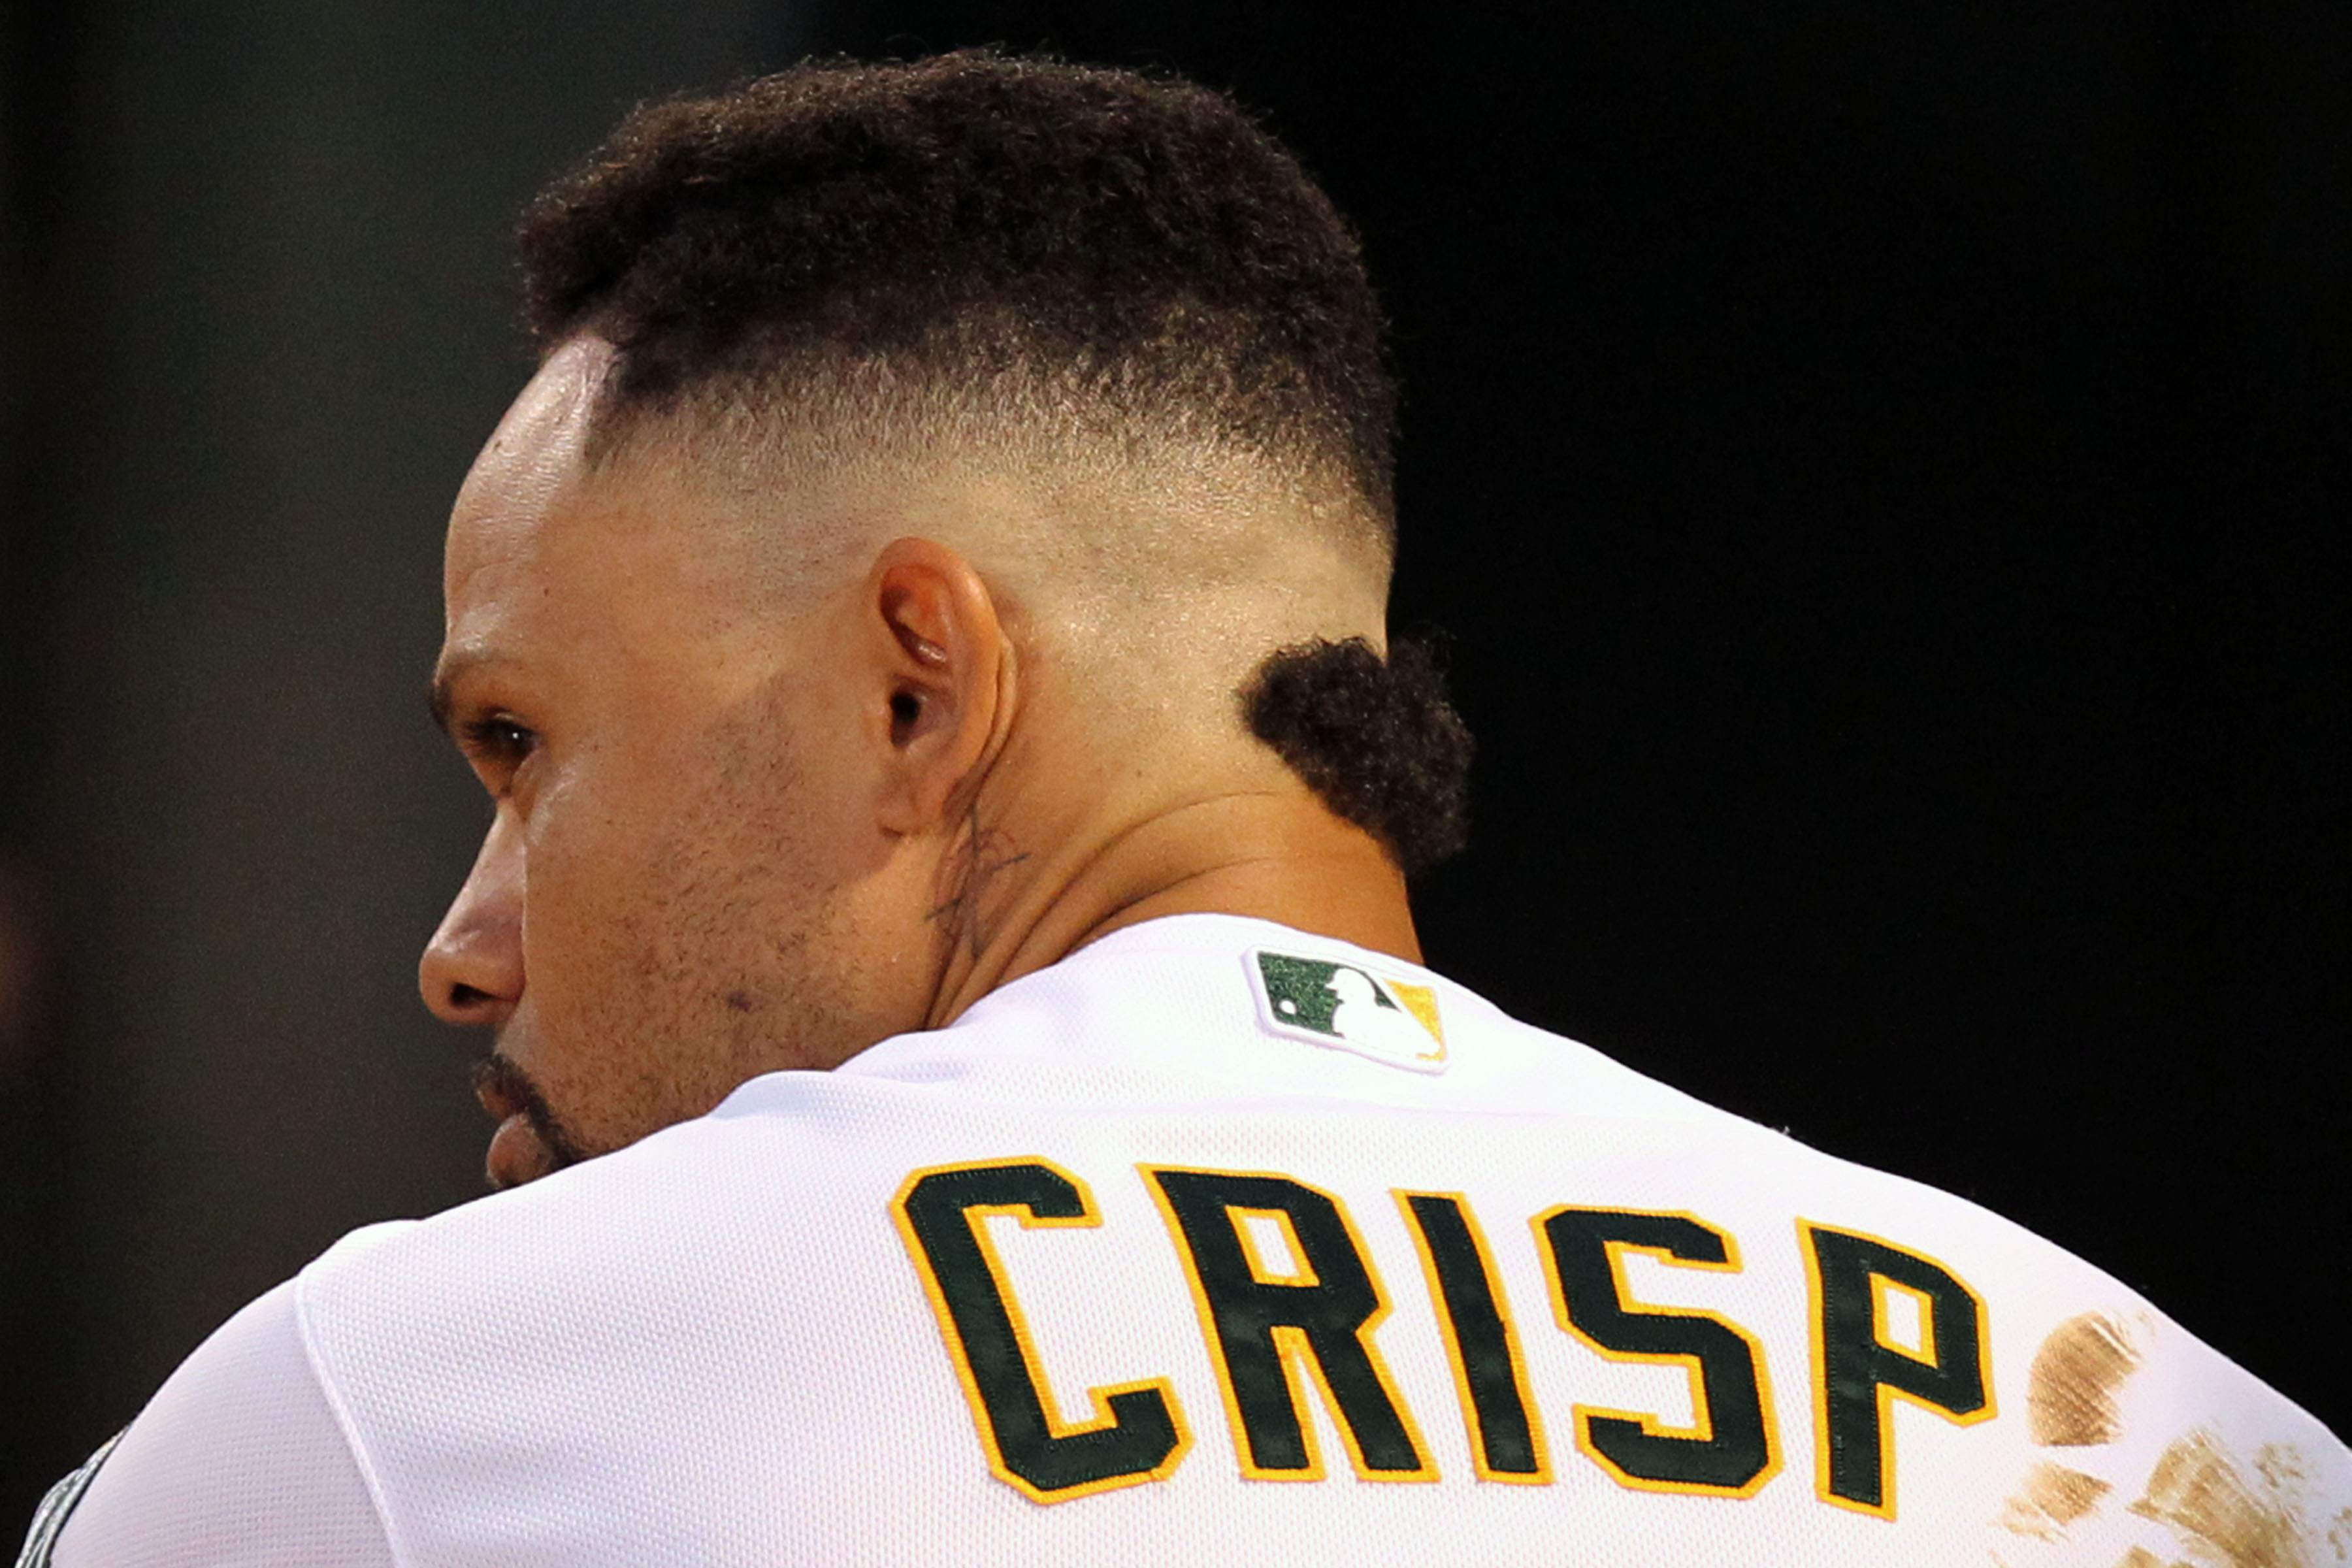 Coco Crisp got the worst haircut in baseball history